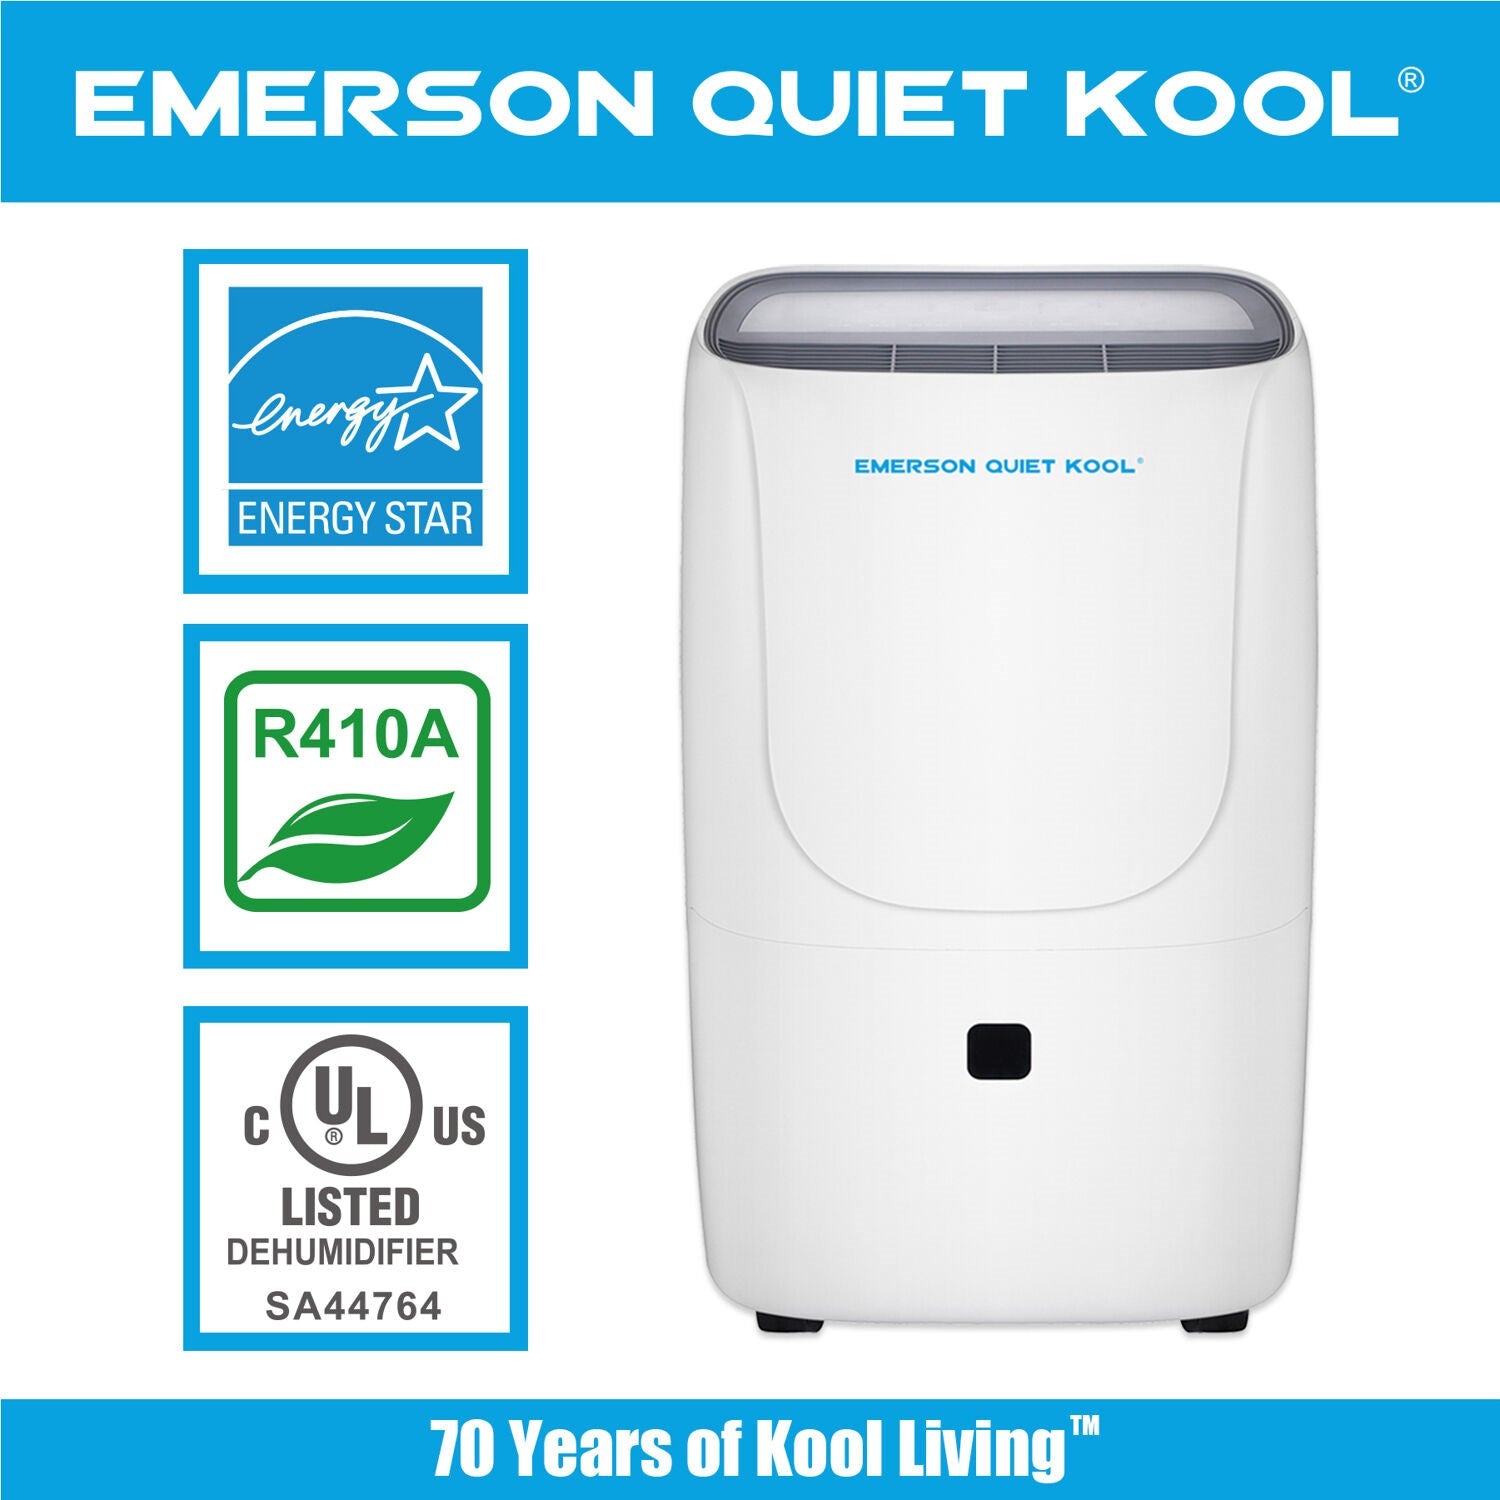 Emerson Quiet Kool 50-Pint Dehumidifier with Built-In Vertical Pump